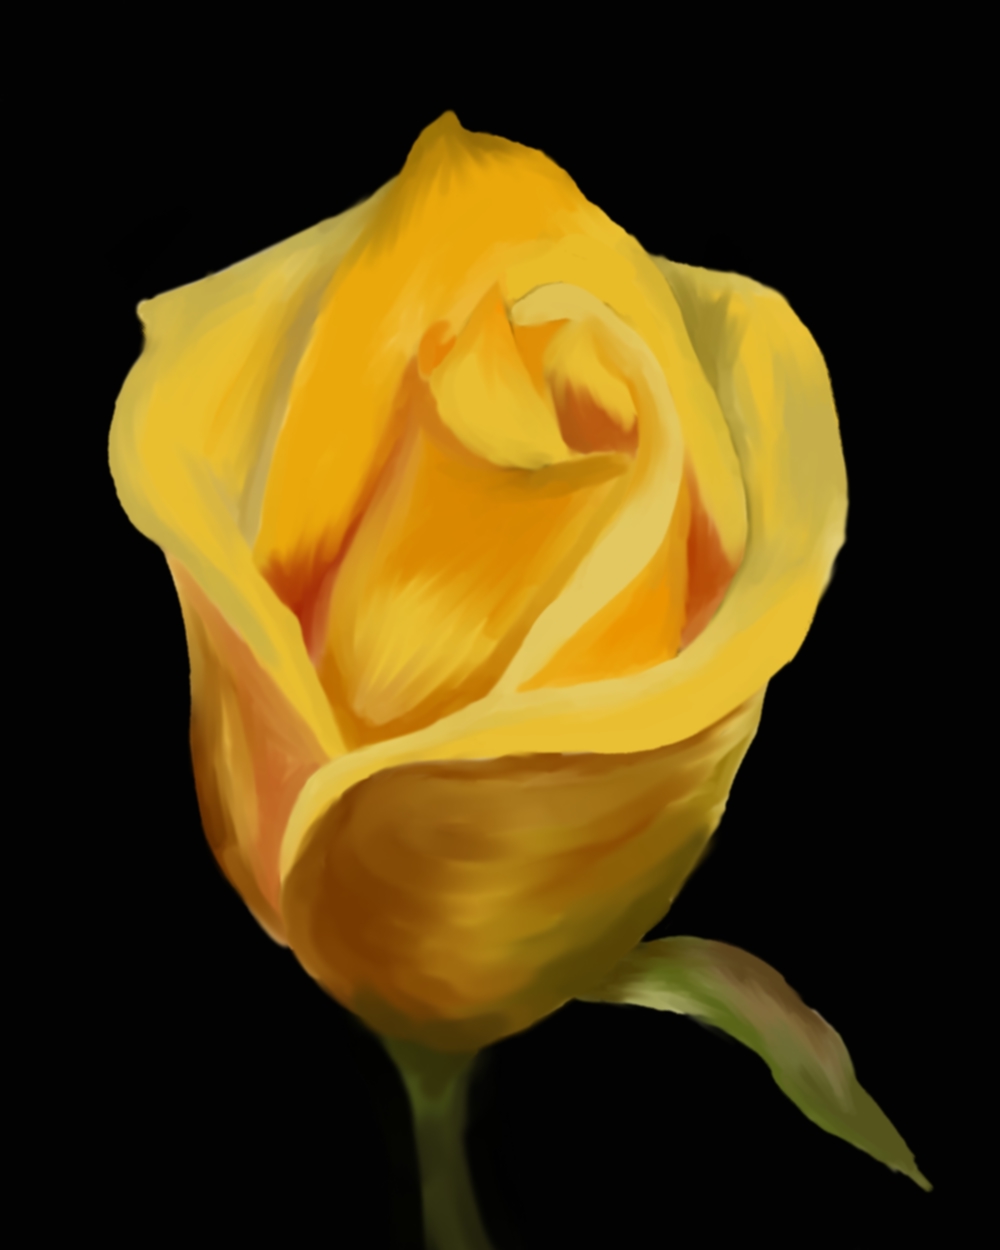 Madasa Deviantart Yellow Rose By